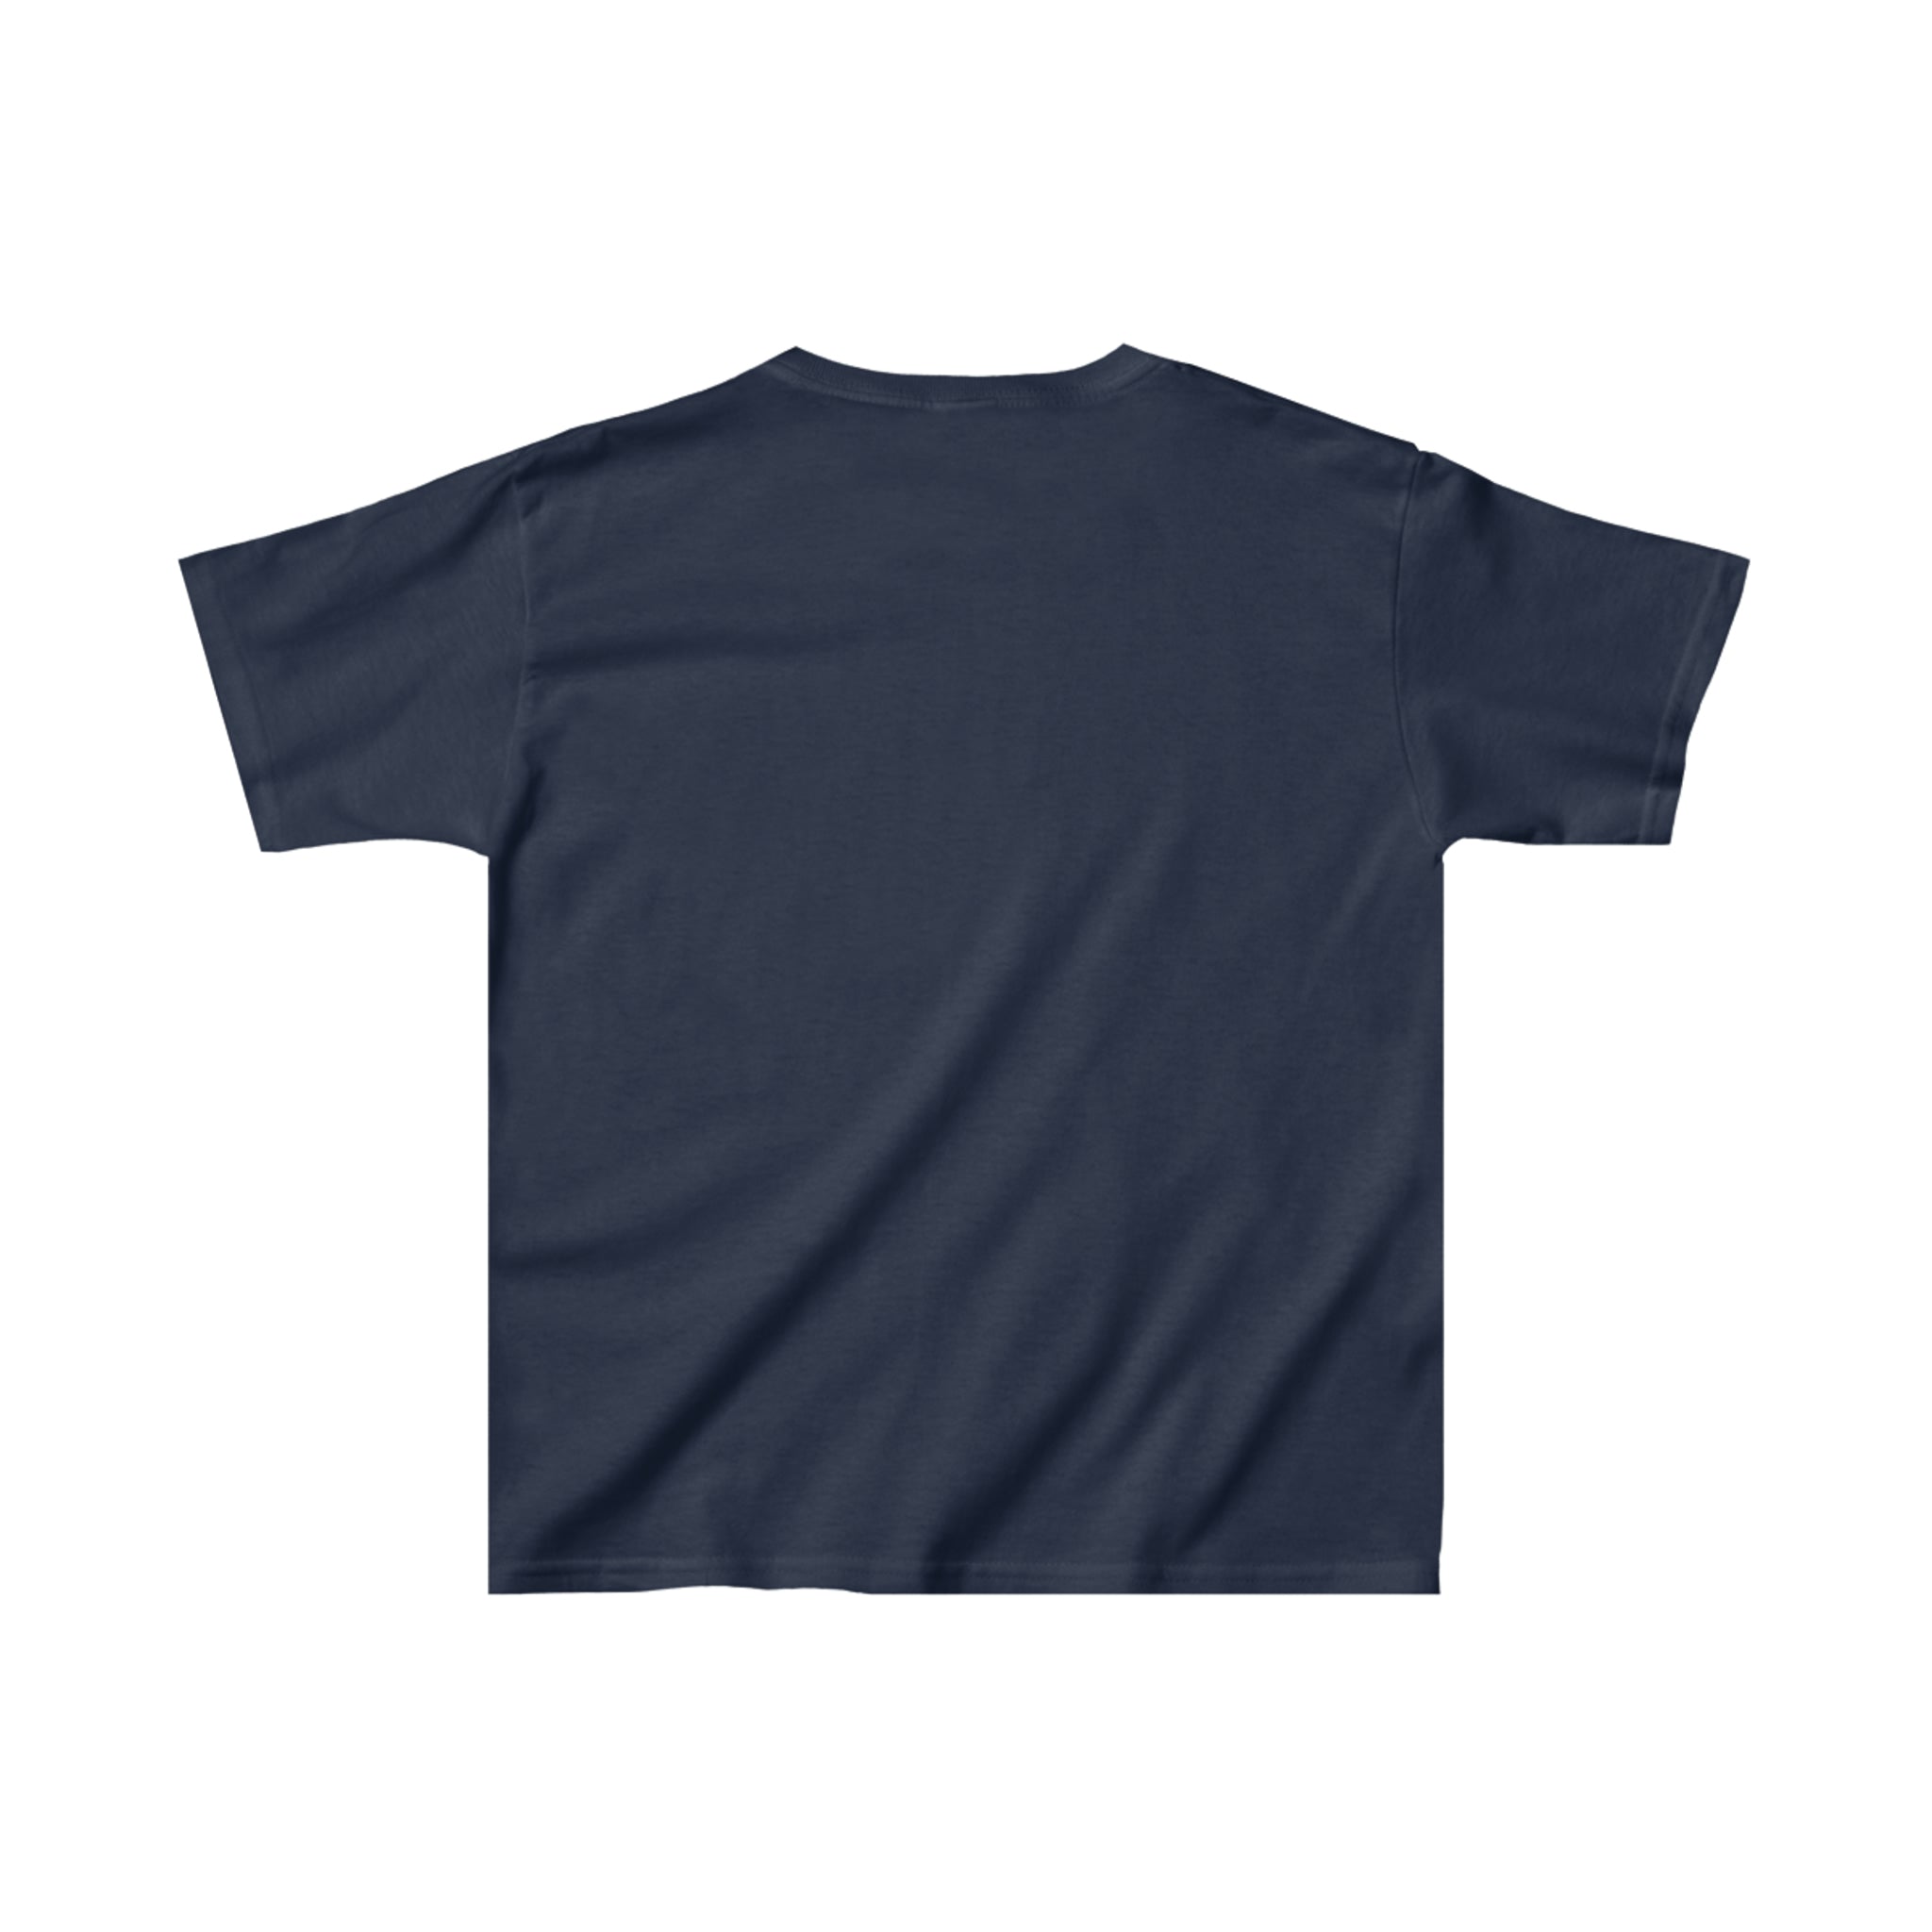 Milwaukee Clarks T-Shirt (Youth)